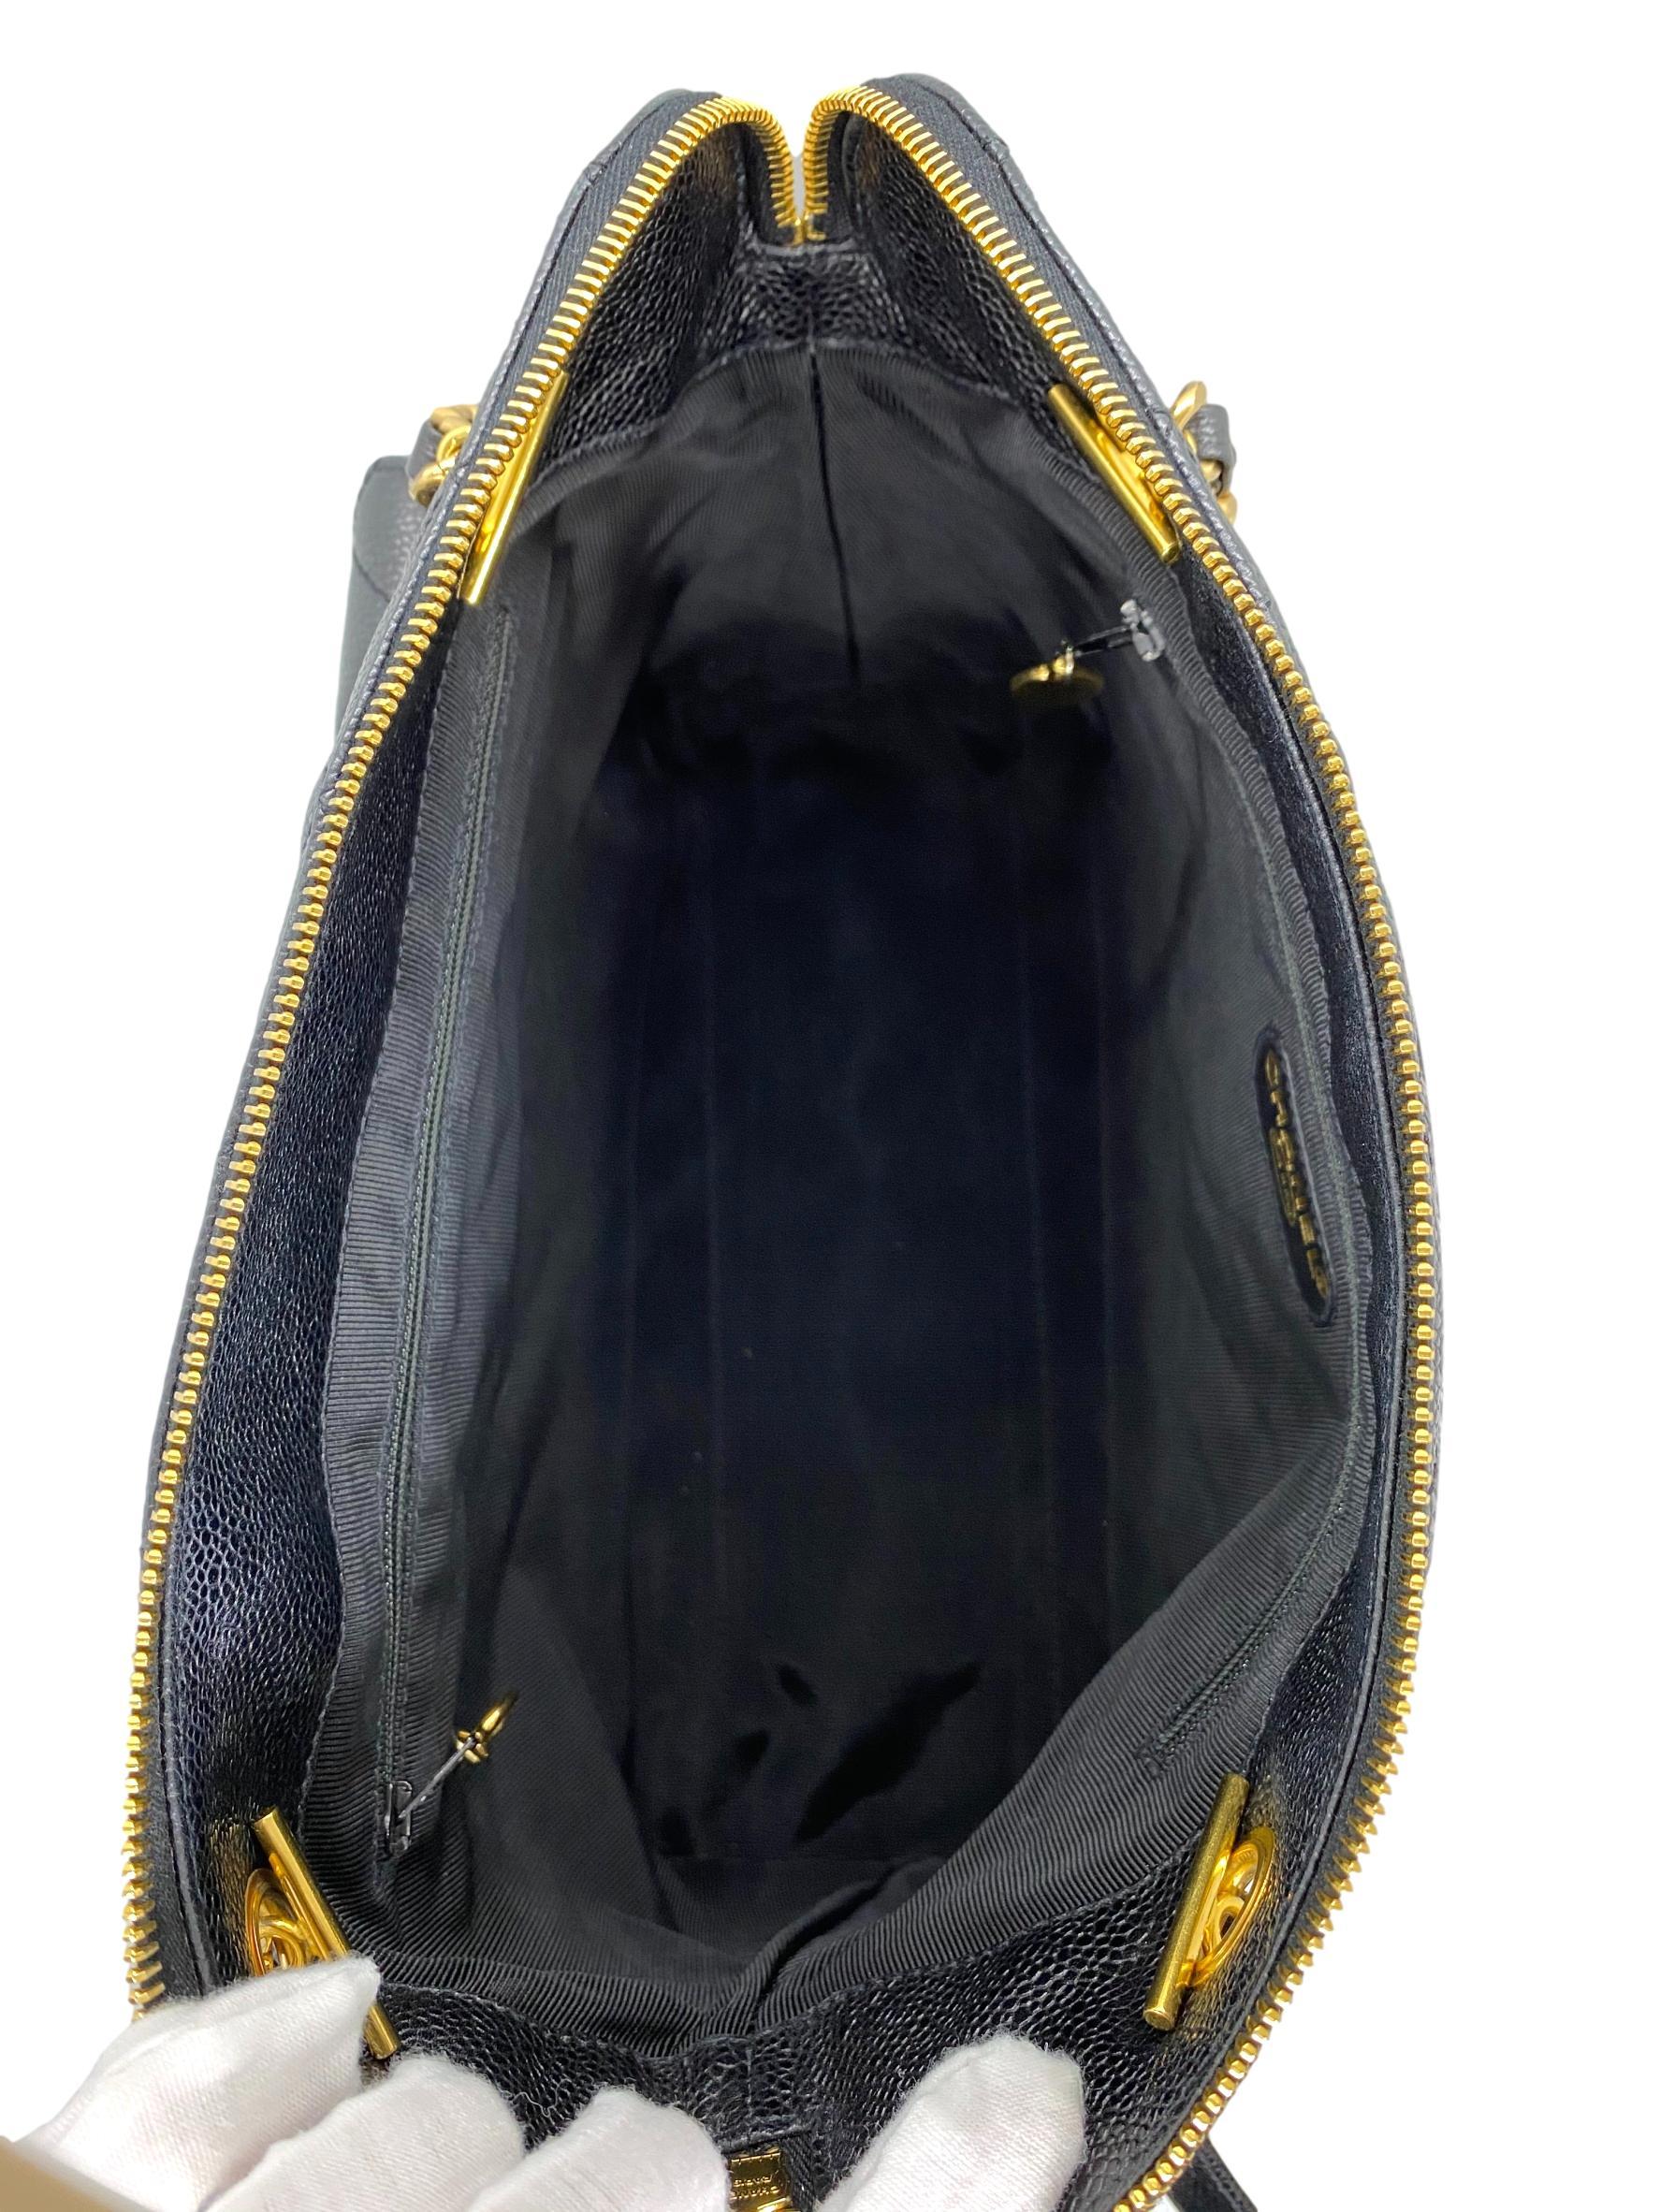 Women's or Men's Chanel Vintage Black Quilted Caviar Leather Shoulder Bag with Gold Hardware